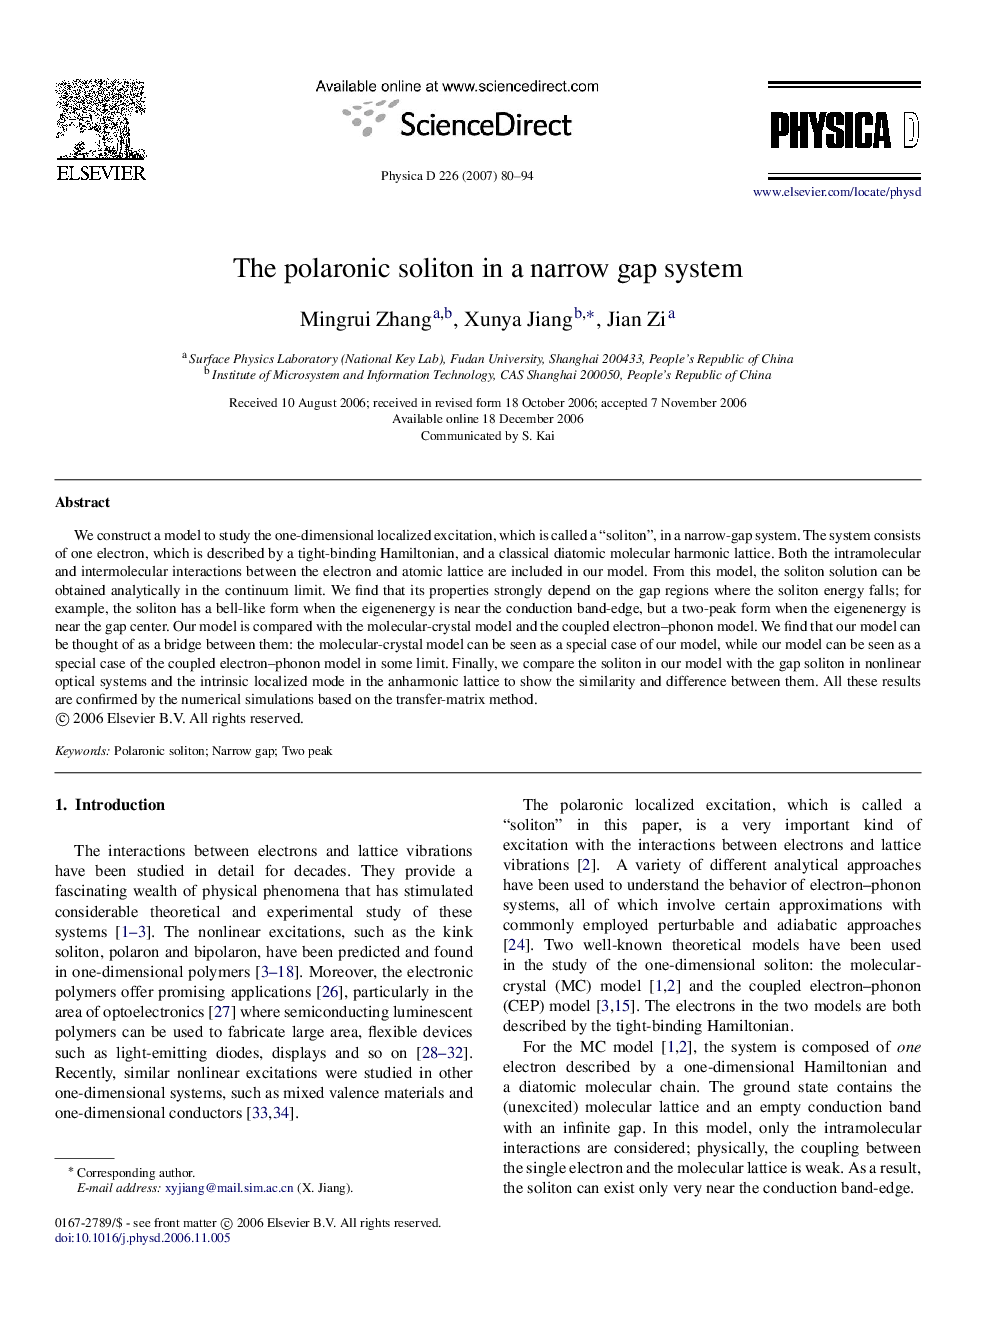 The polaronic soliton in a narrow gap system